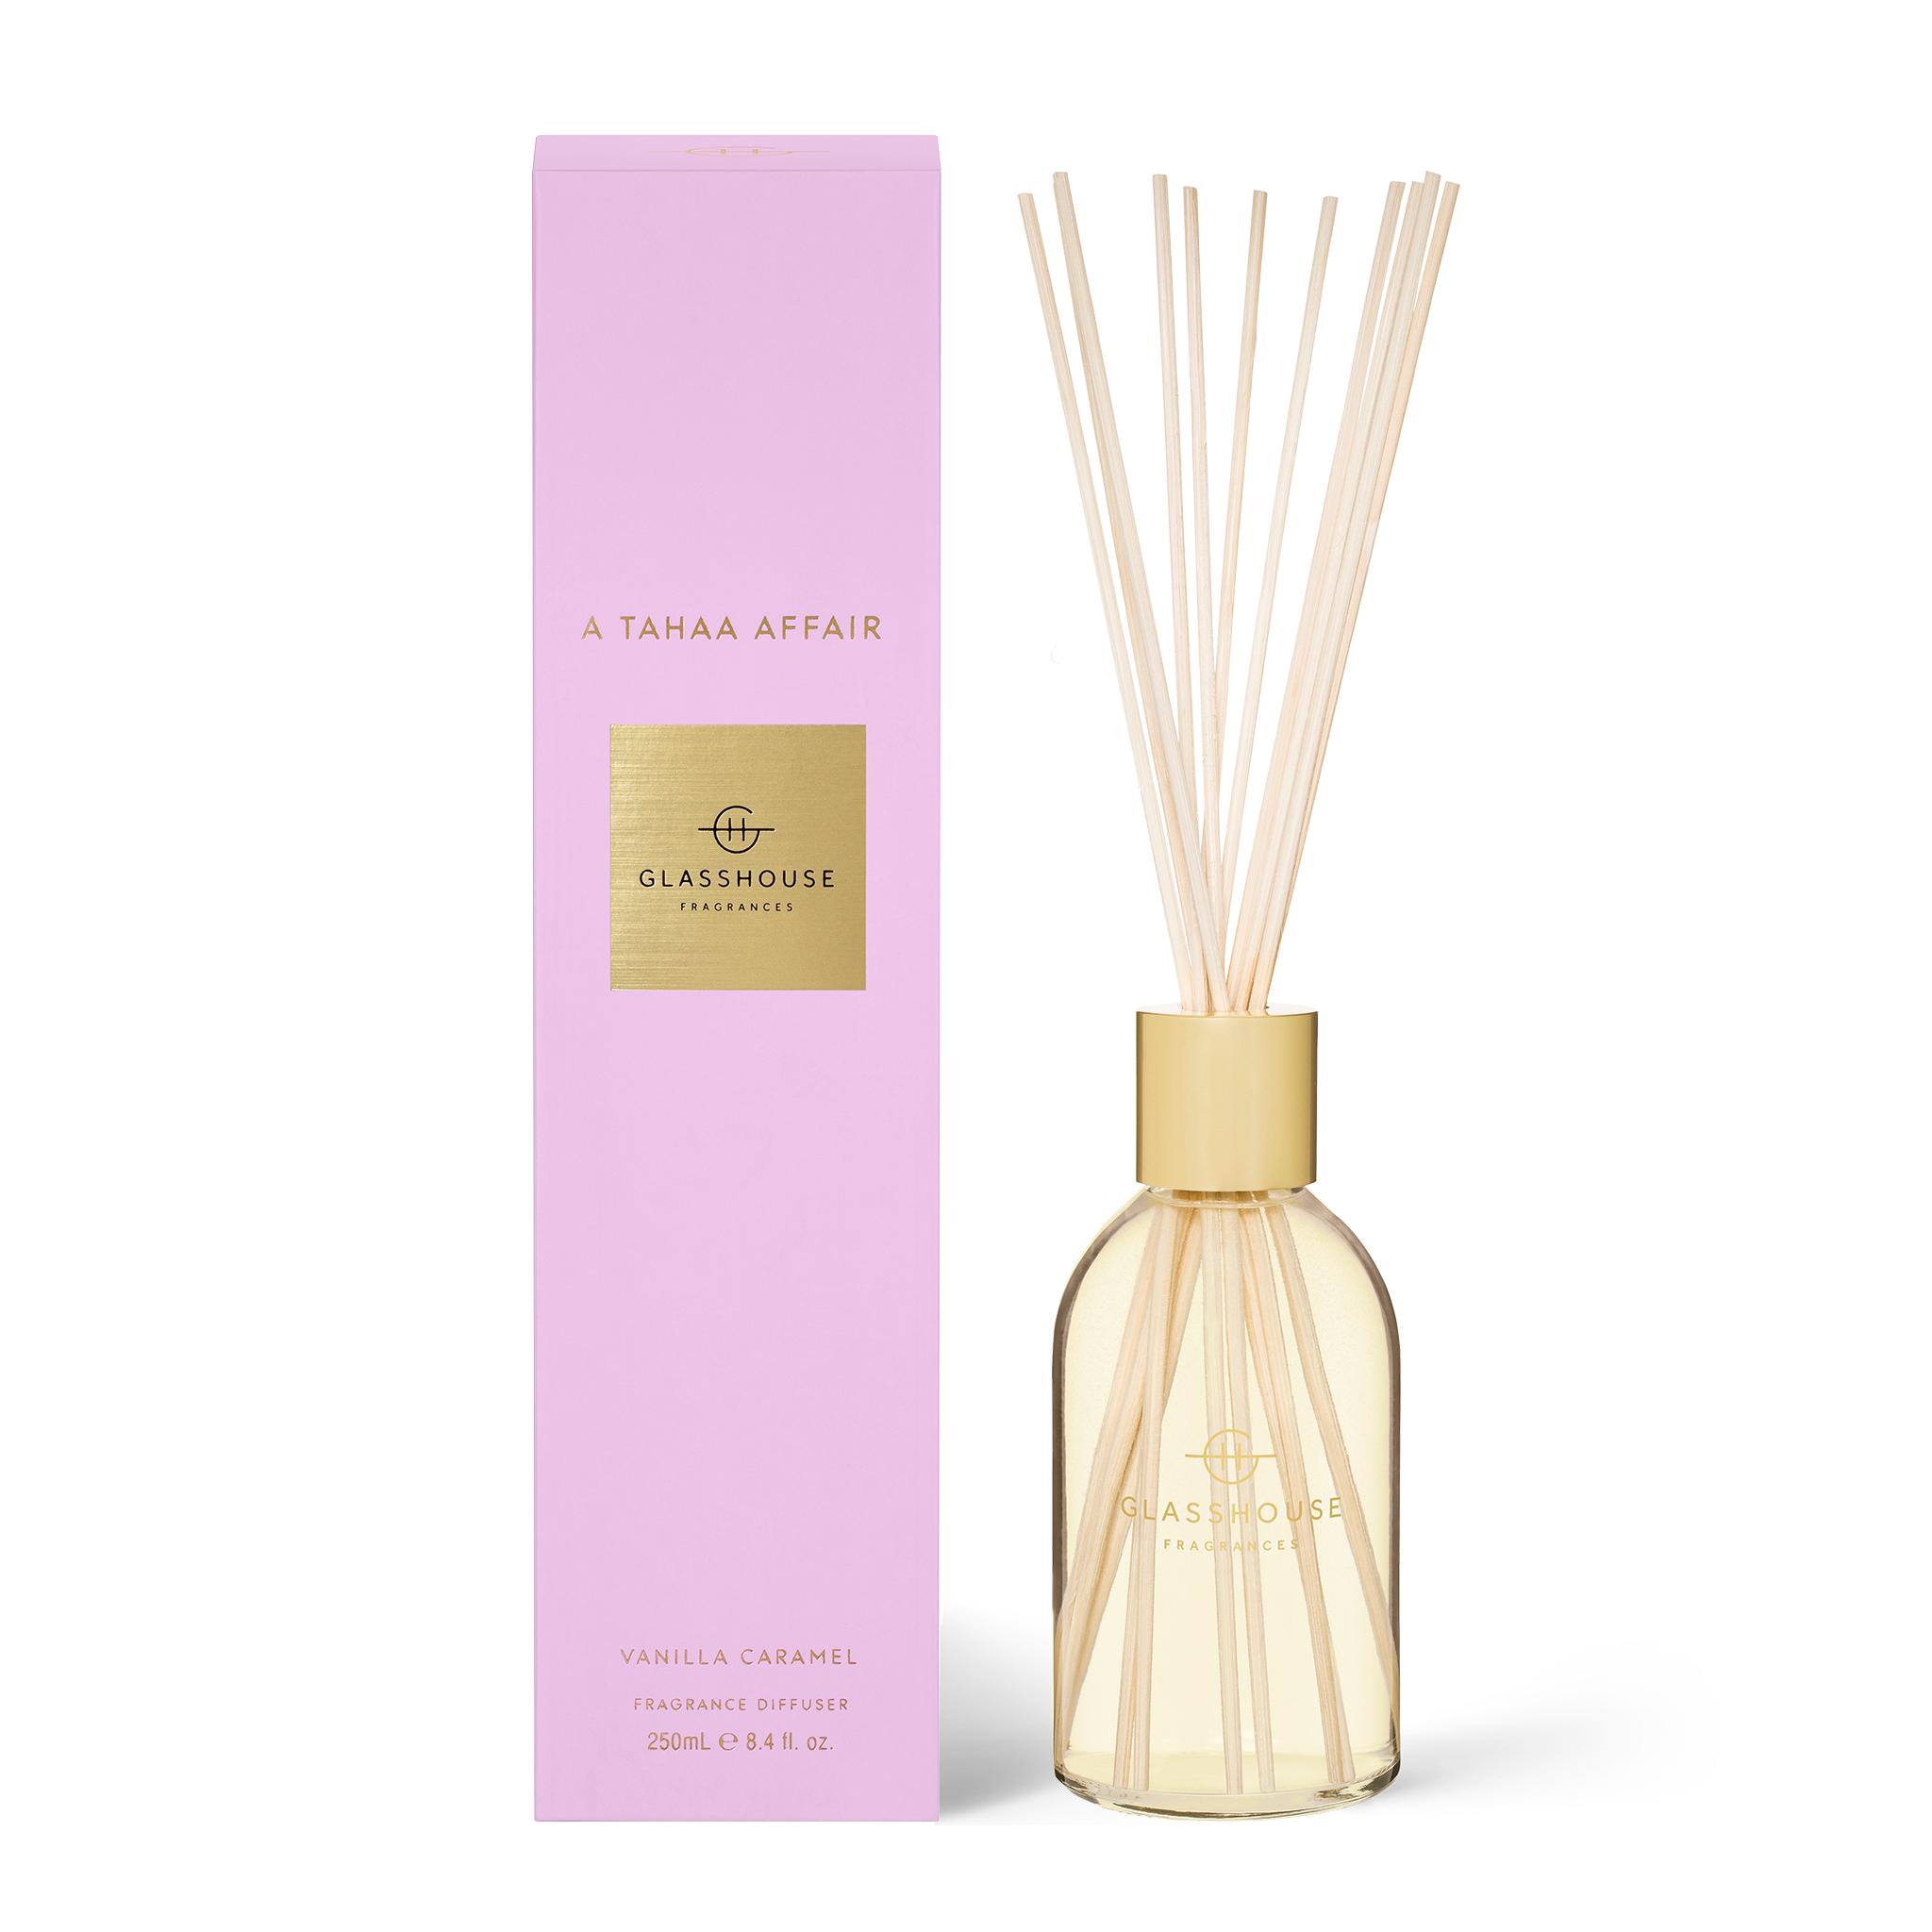 Glasshouse Fragrances 250ml Diffuser - A TAHAA AFFAIR - Vanilla Caramel